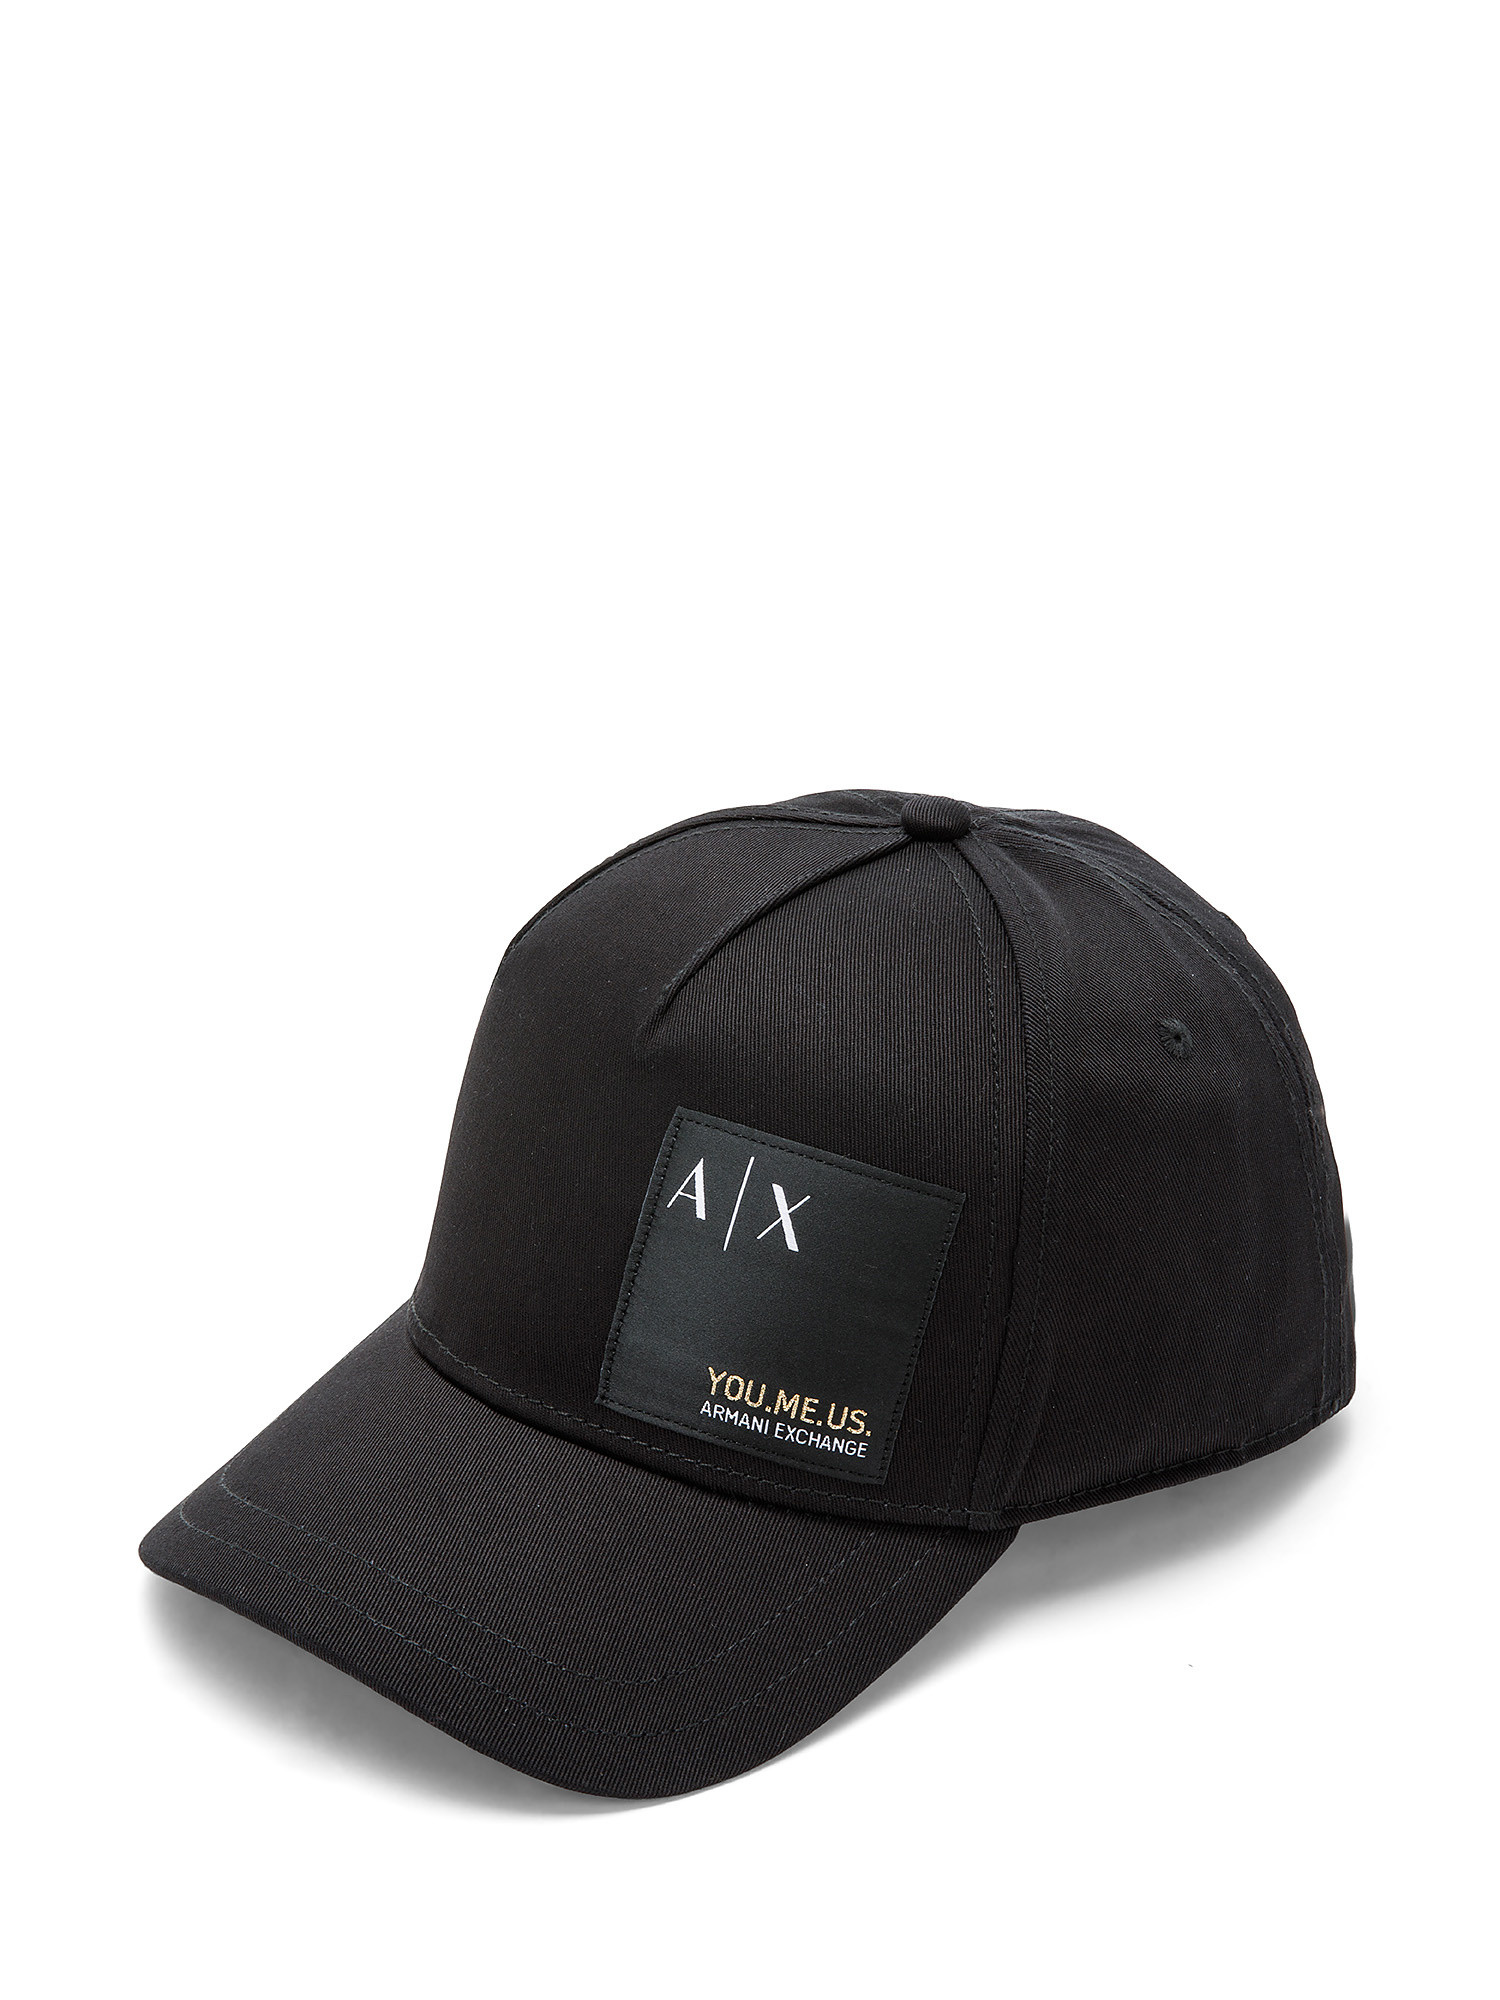 Armani Exchange - Organic cotton cap with visor, Black, large image number 0